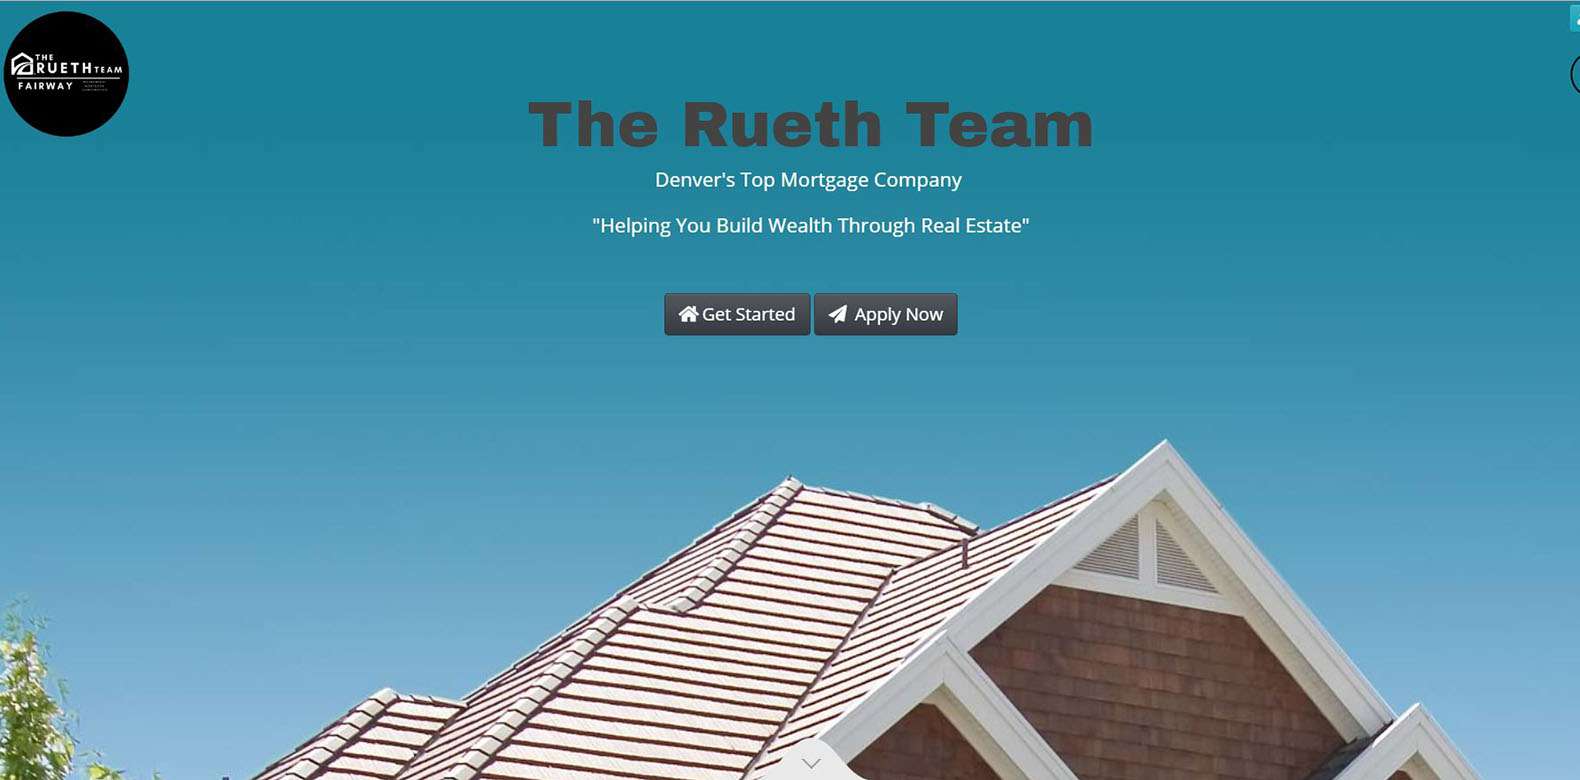 
New Website Launch: The Rueth Team